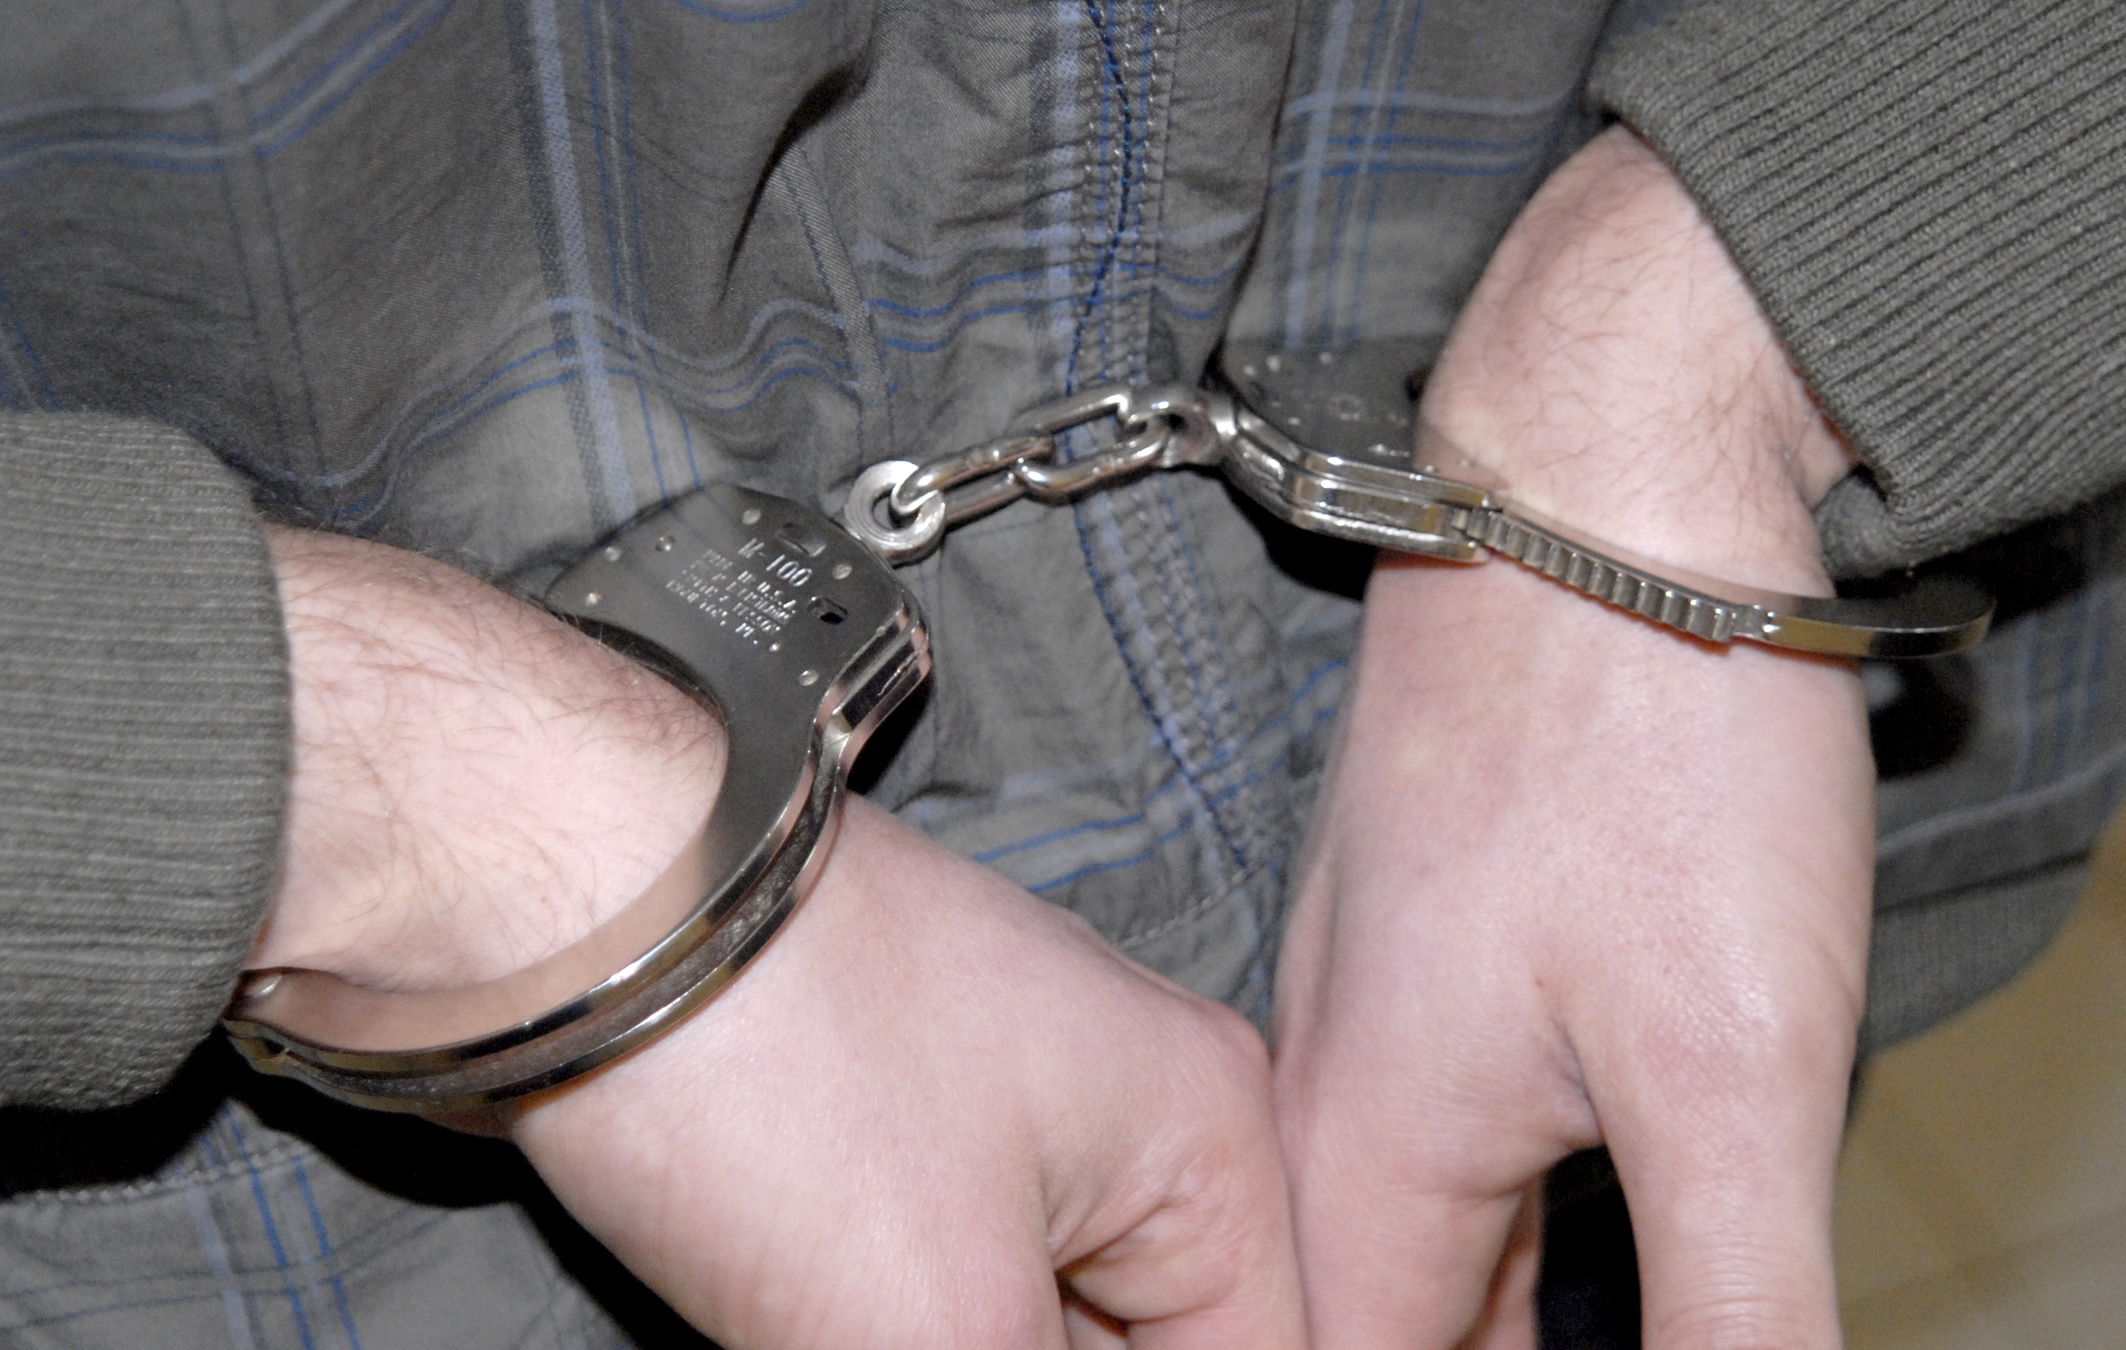 Zwei Männer bei Kiefersfelden verhaftet